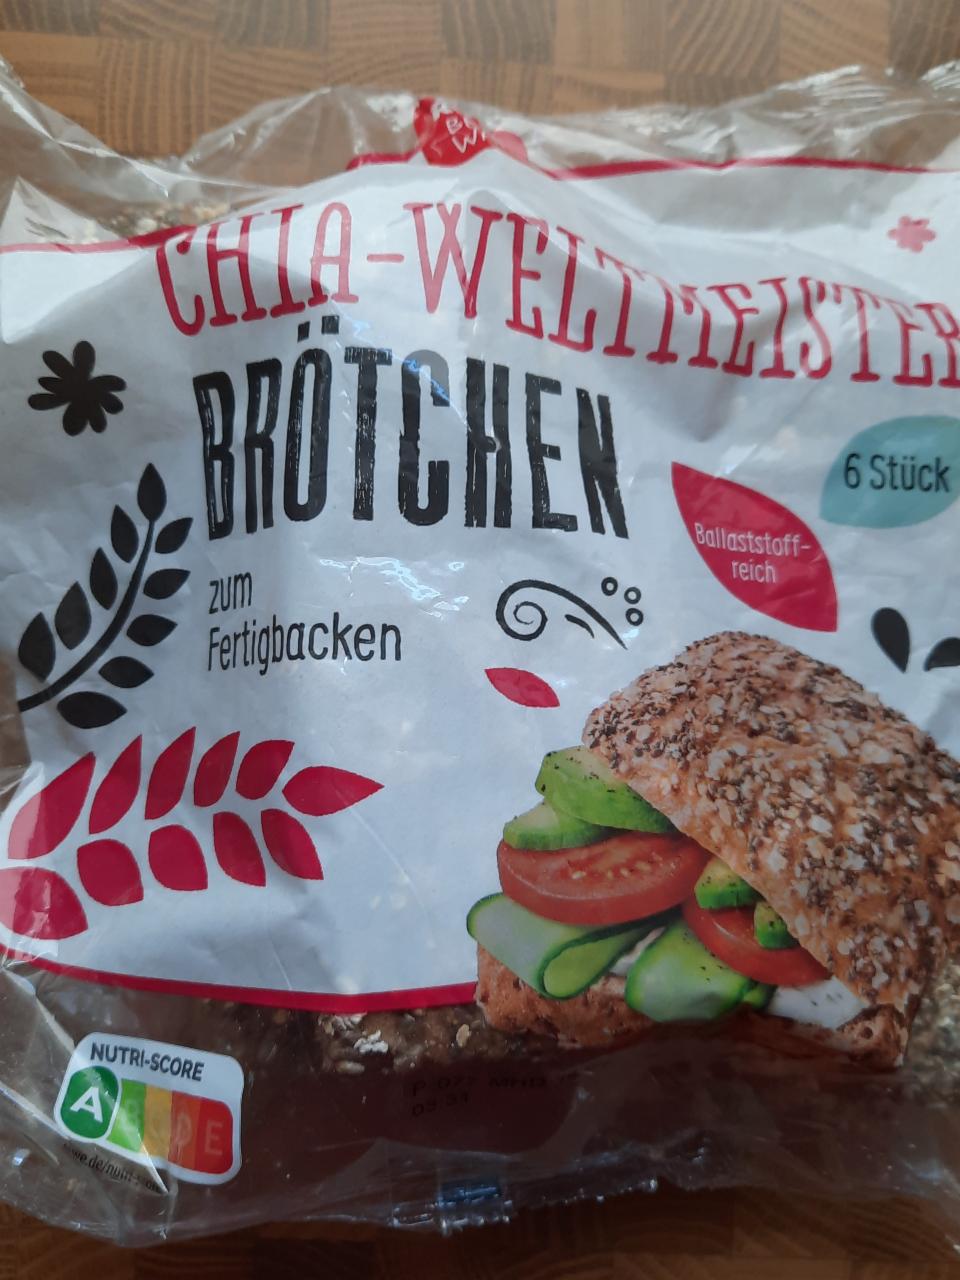 Фото - Зерновые булочки Chia weltmeister brötchen Rewe